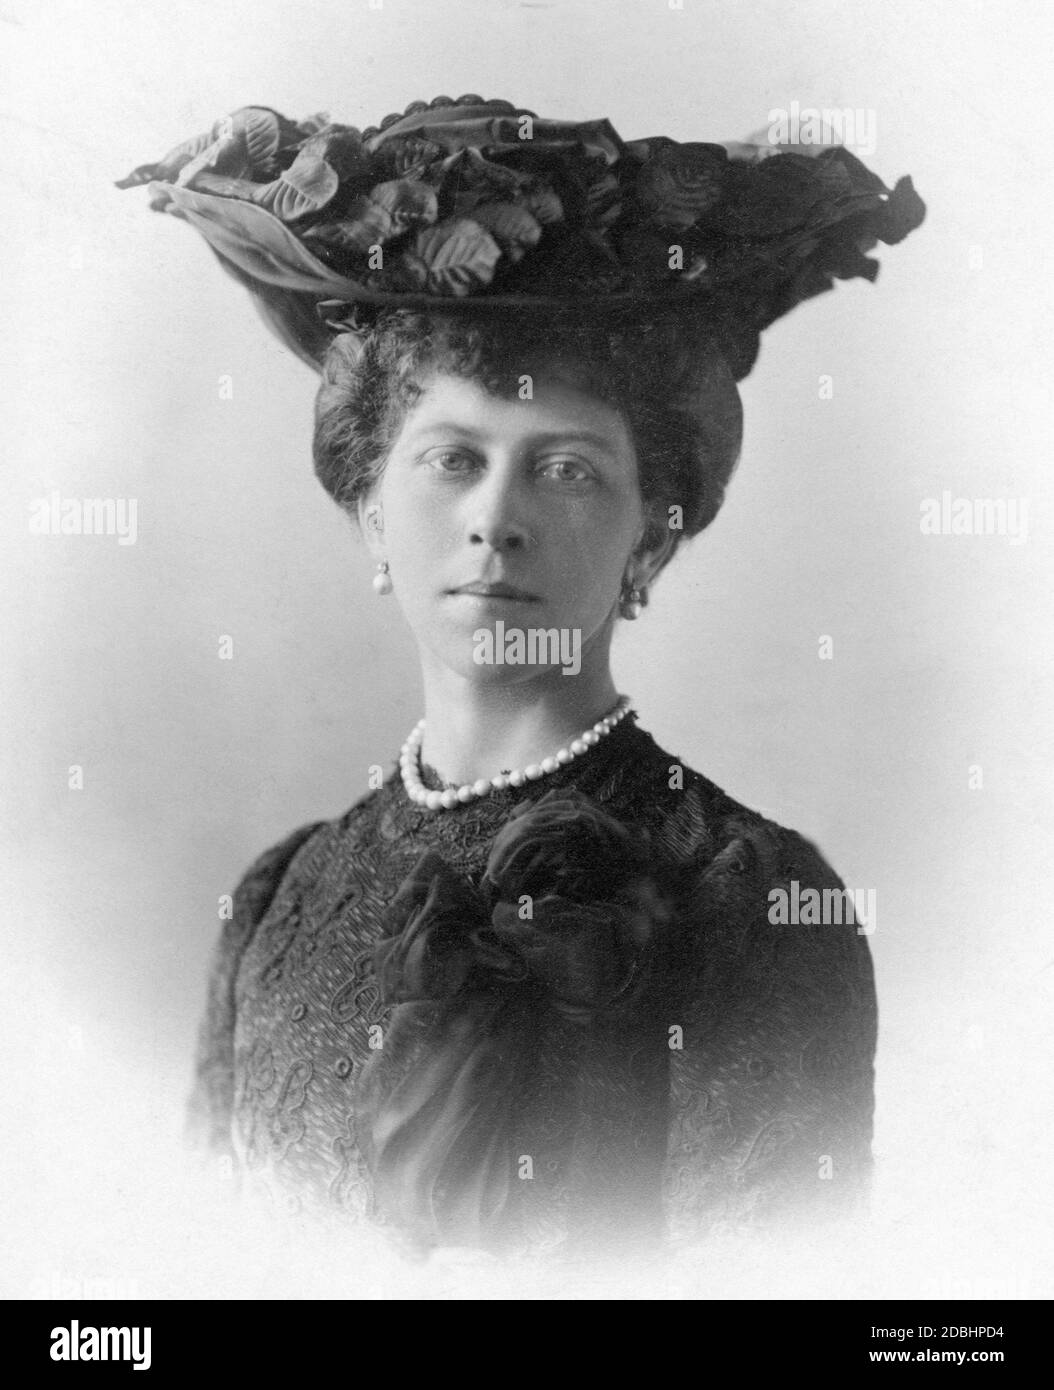 Princess Viktoria of Schaumburg-Lippe (born of Prussia, sister of Wilhelm II) in 1905. Photo taken by court photographers L. Stueting & Sohn in Bonn. Stock Photo